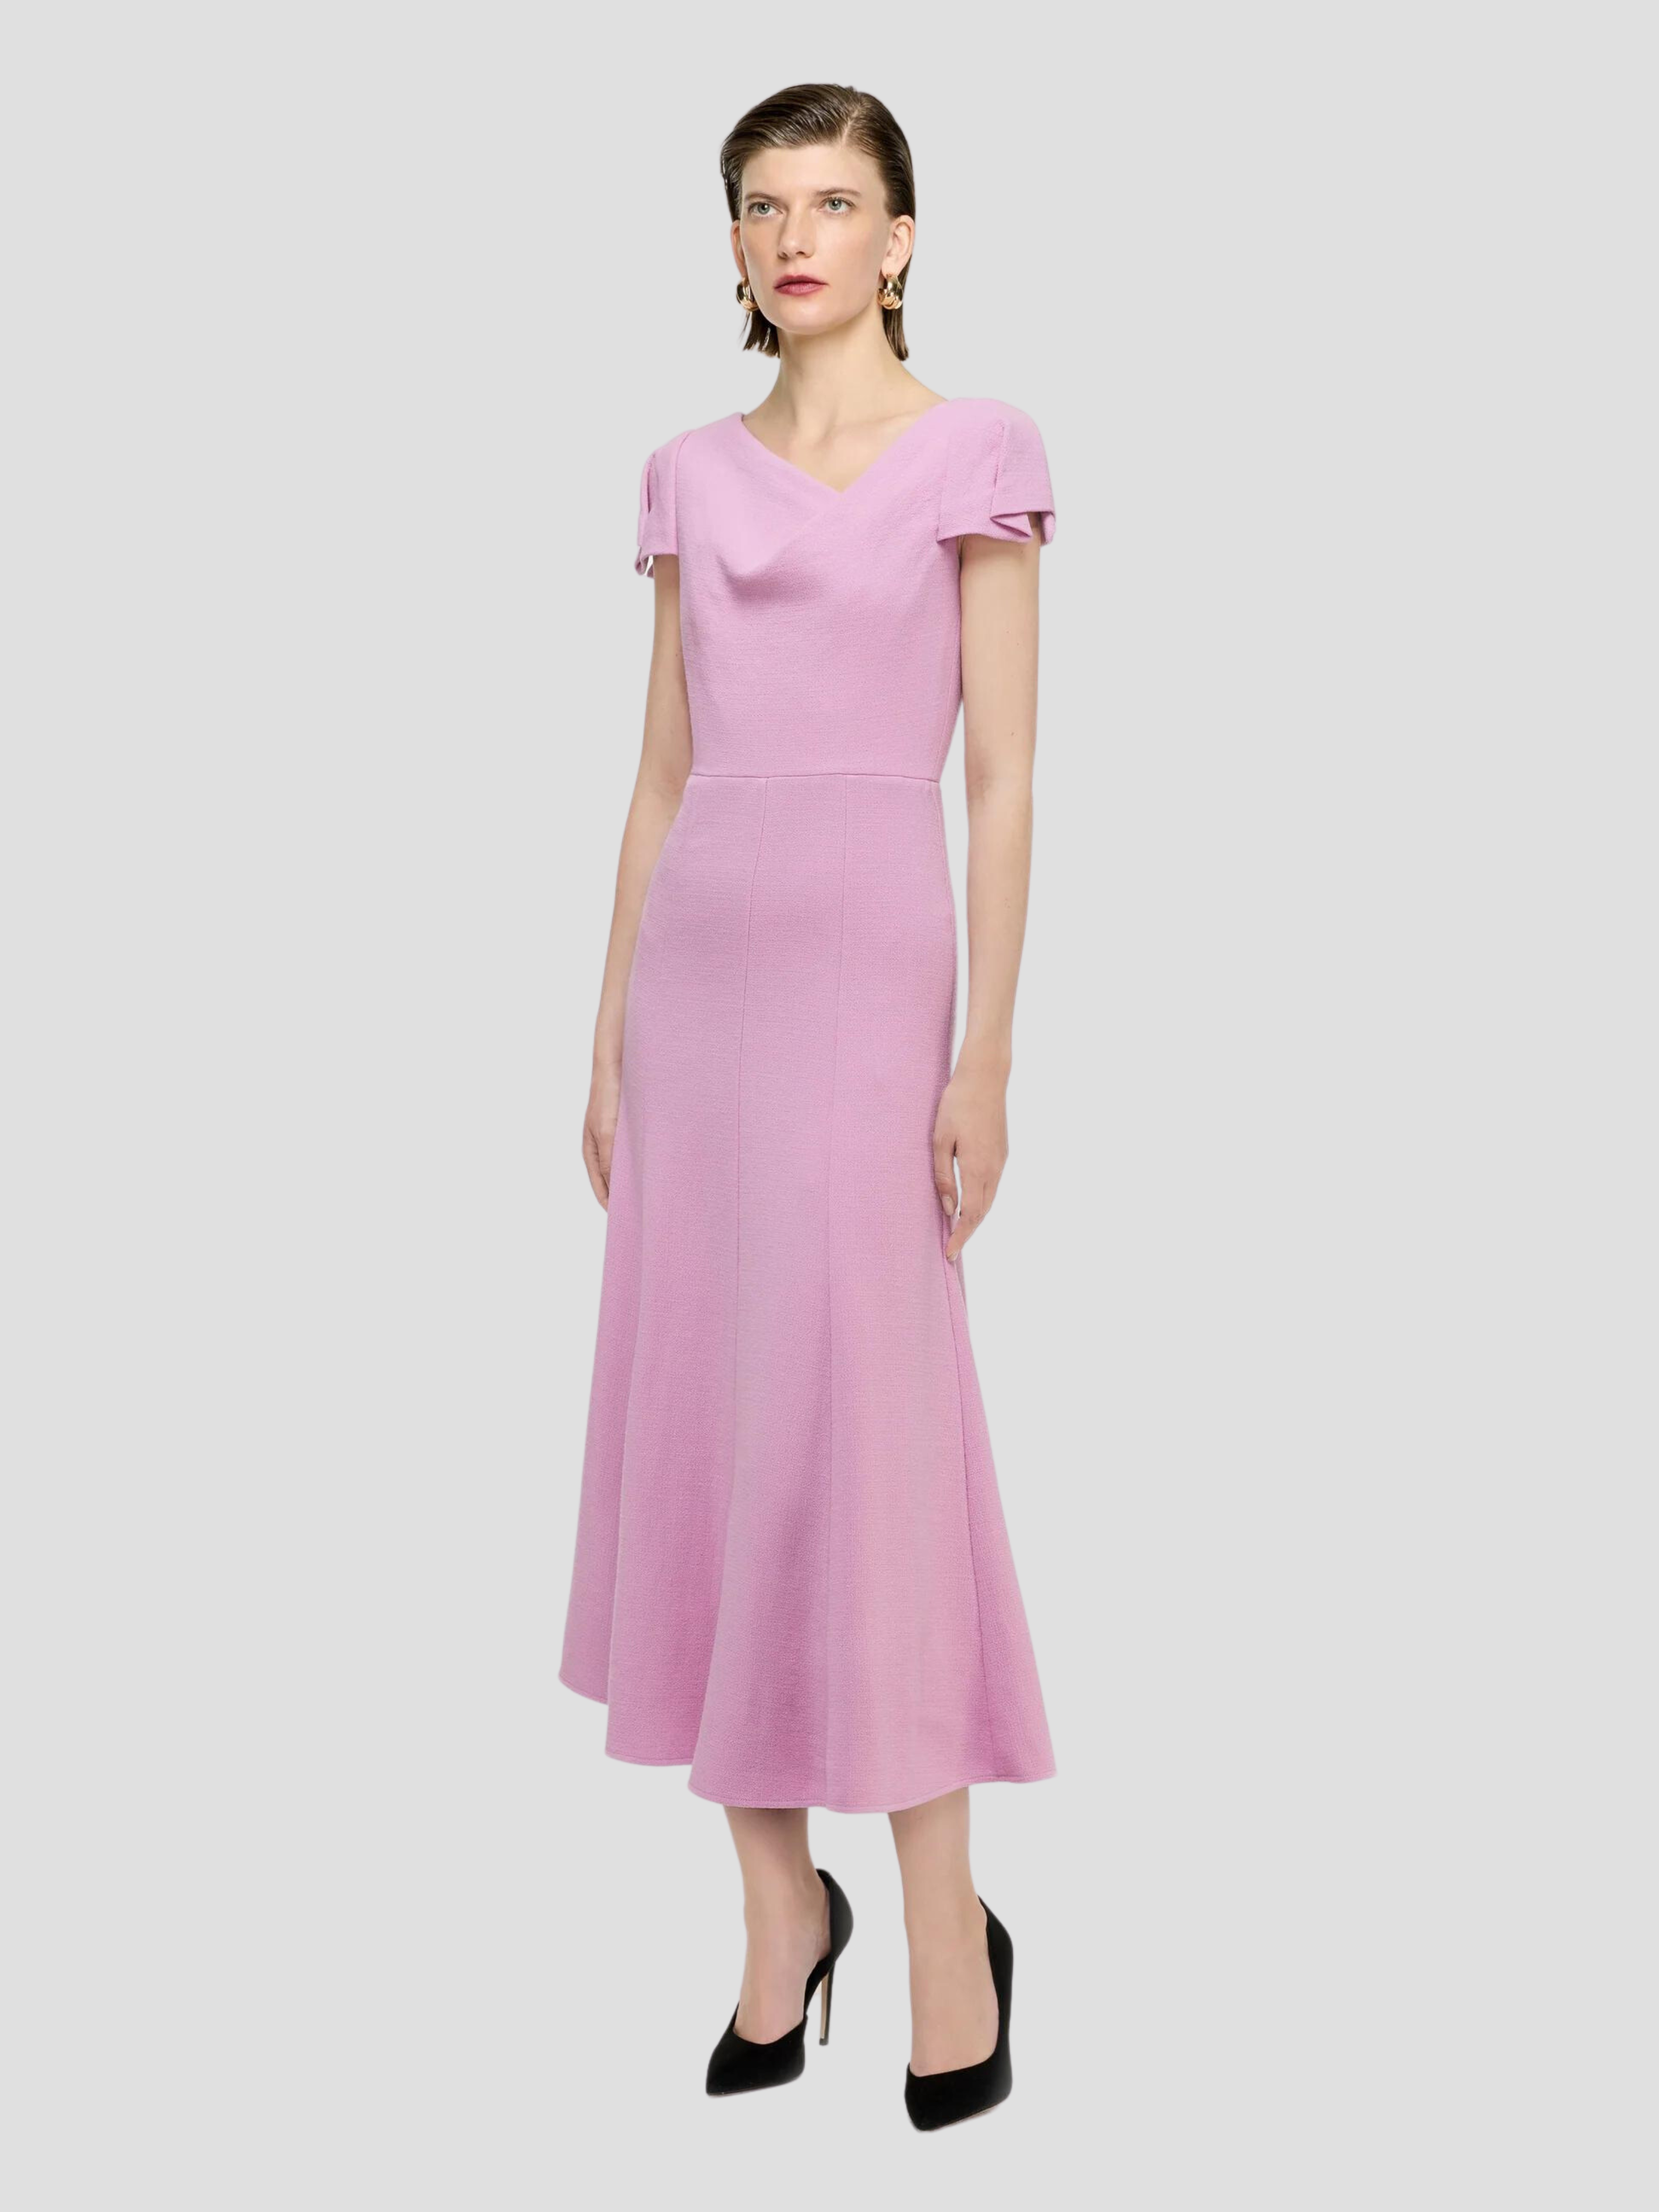 Pink Cap Sleeve Wool Crepe Fivestory Dress | Midi New York